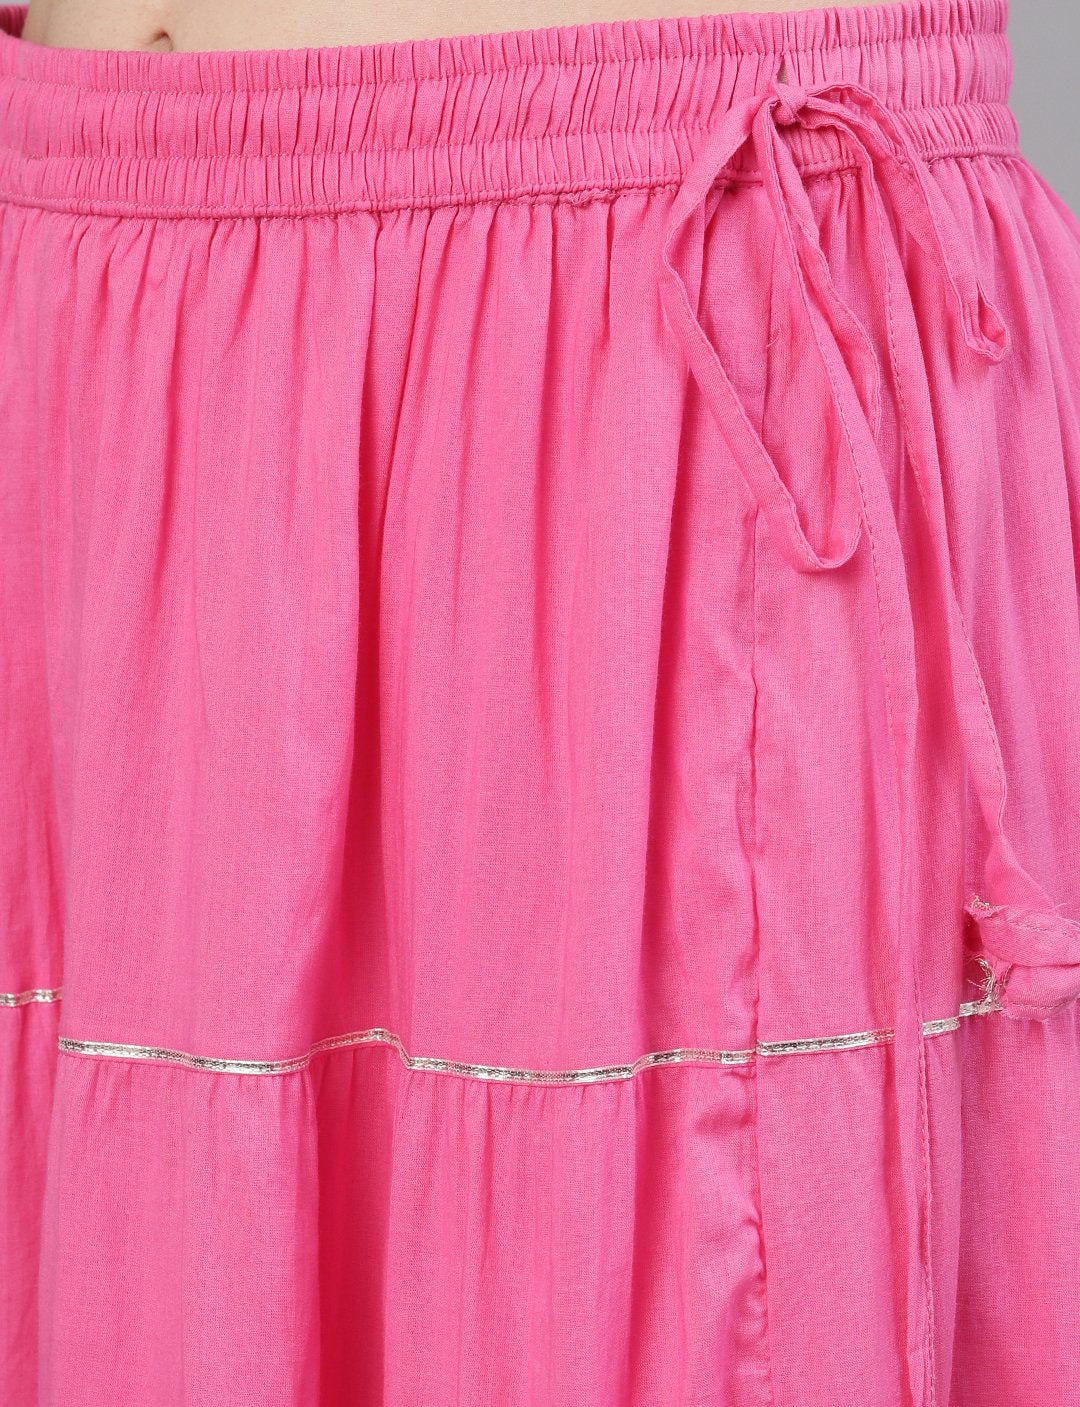 Ishin Women's Cotton Pink Leheriya Embroidered A-Line Kurta Skirt Dupatta Set